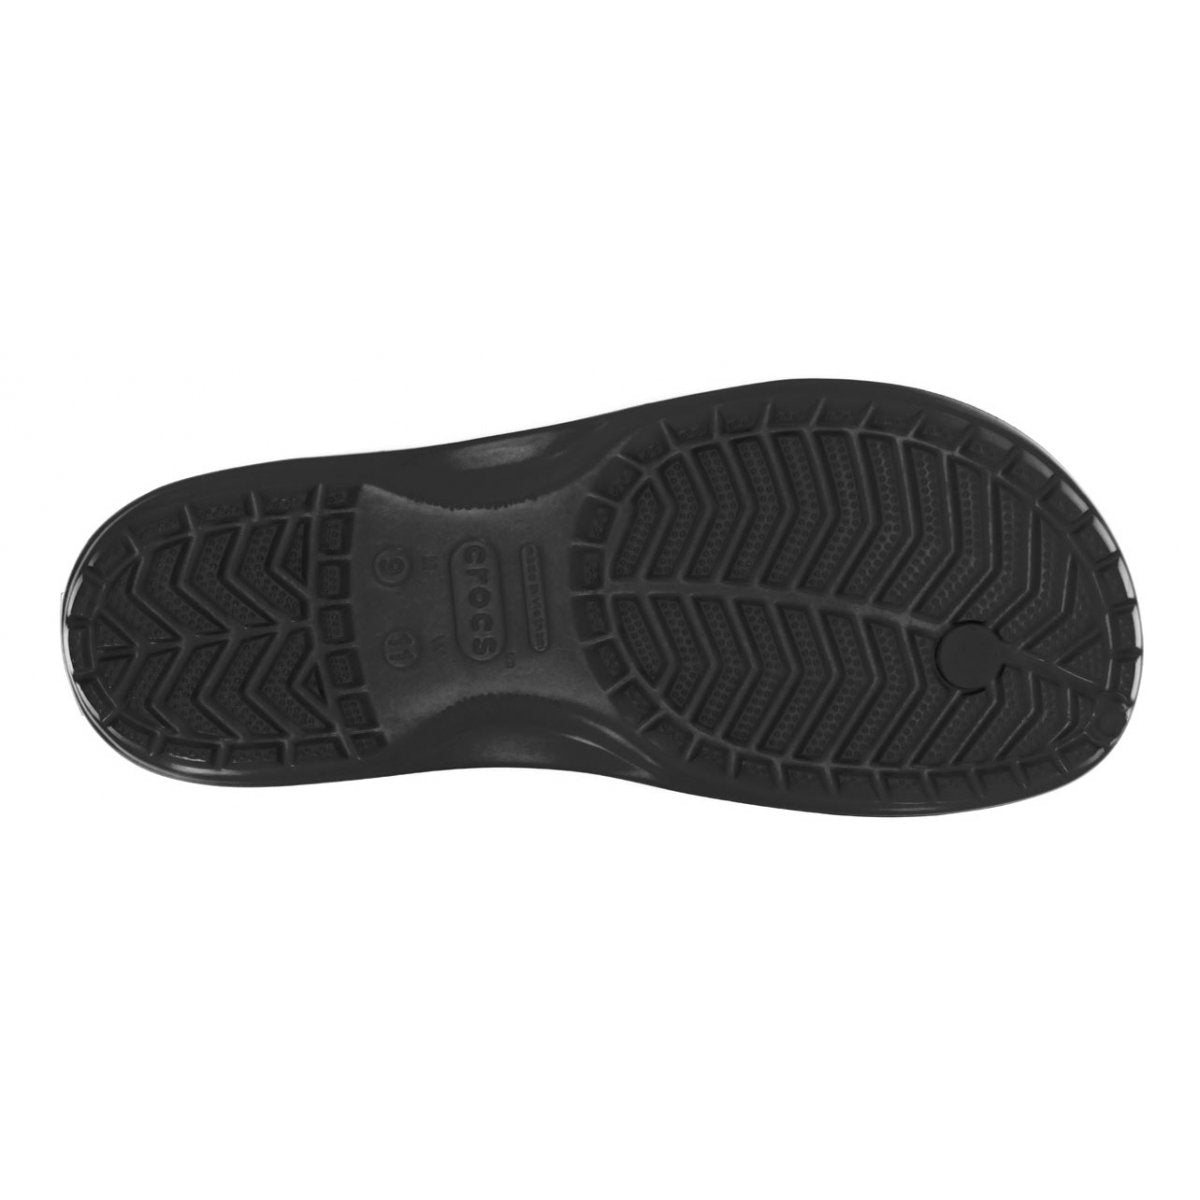 Crocs Band Flip 11033-001 black